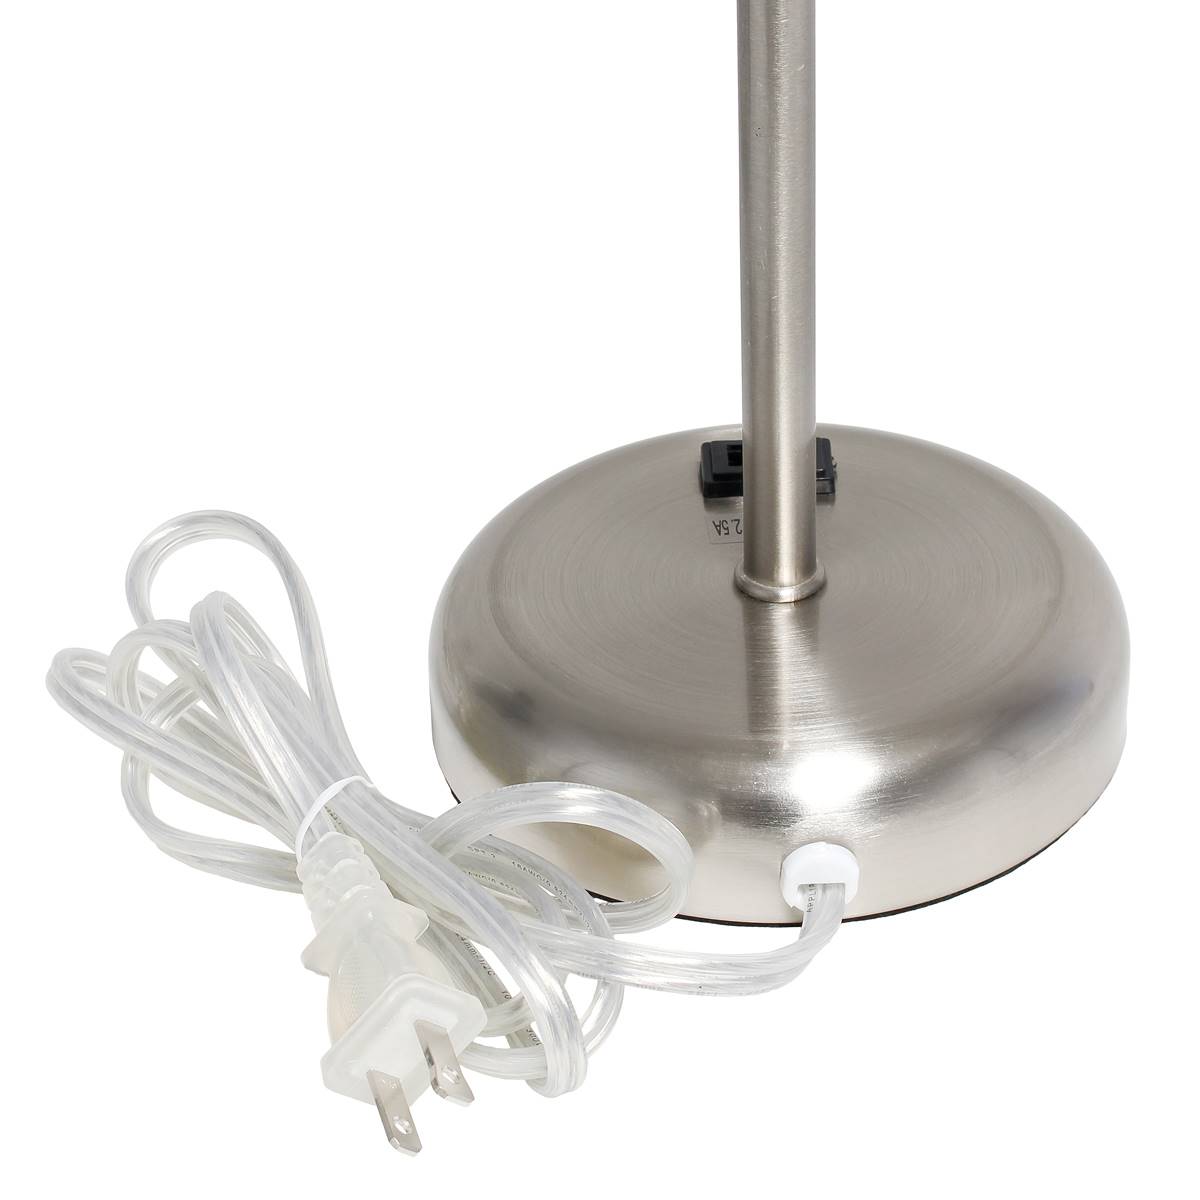 LimeLights Brush Steel/Grey Stick Lamp W/Charging Outlet-Set Of 2